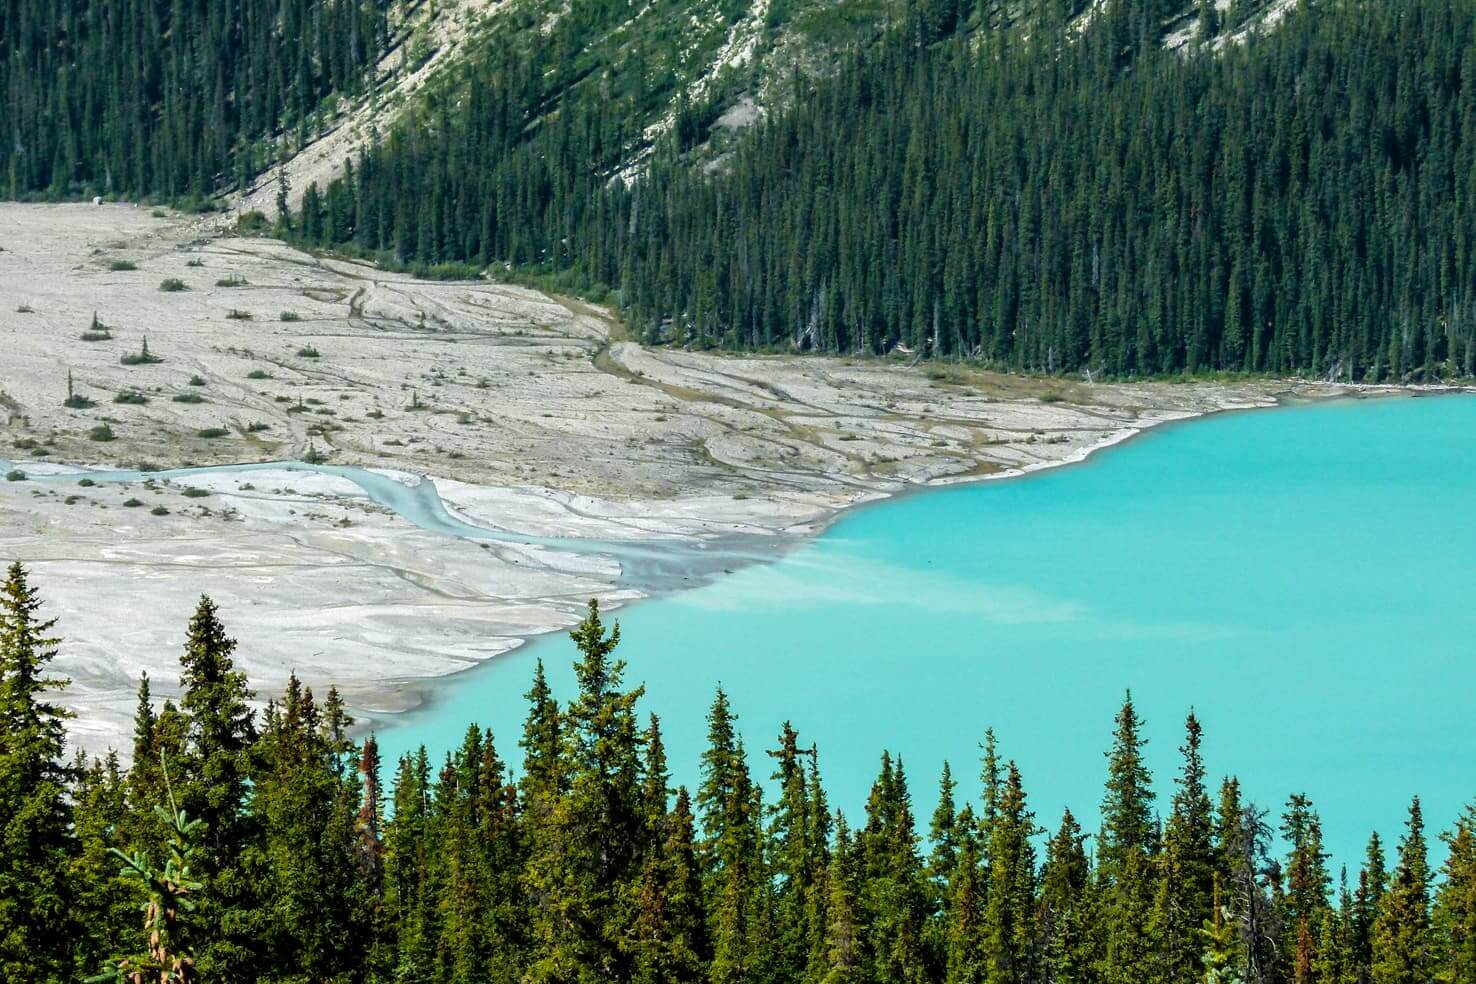 Peyto Lake, Canada - photoshopped or real